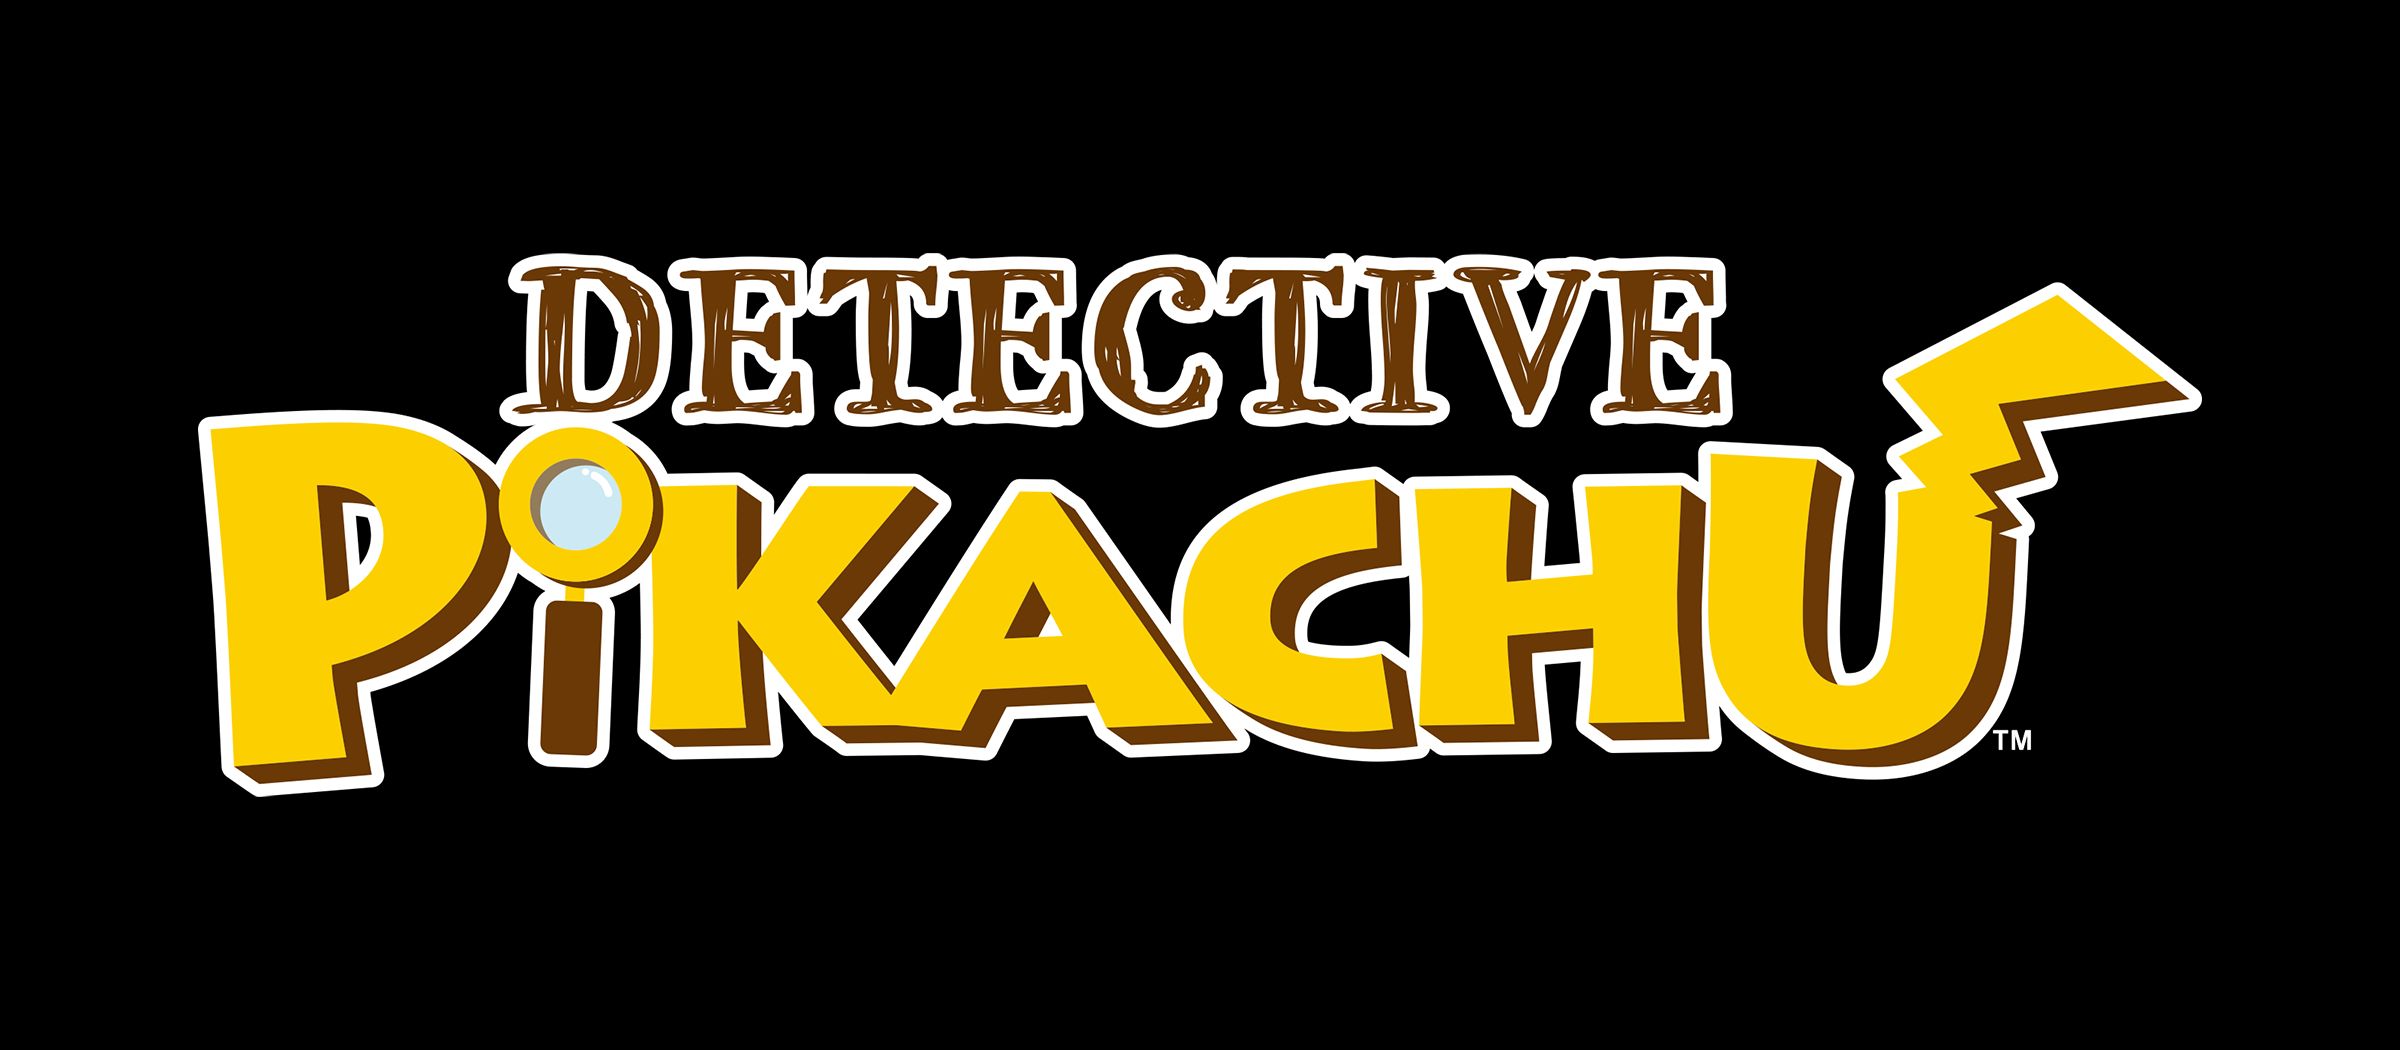 Detective Pikachu  1366x768 Wallpapers